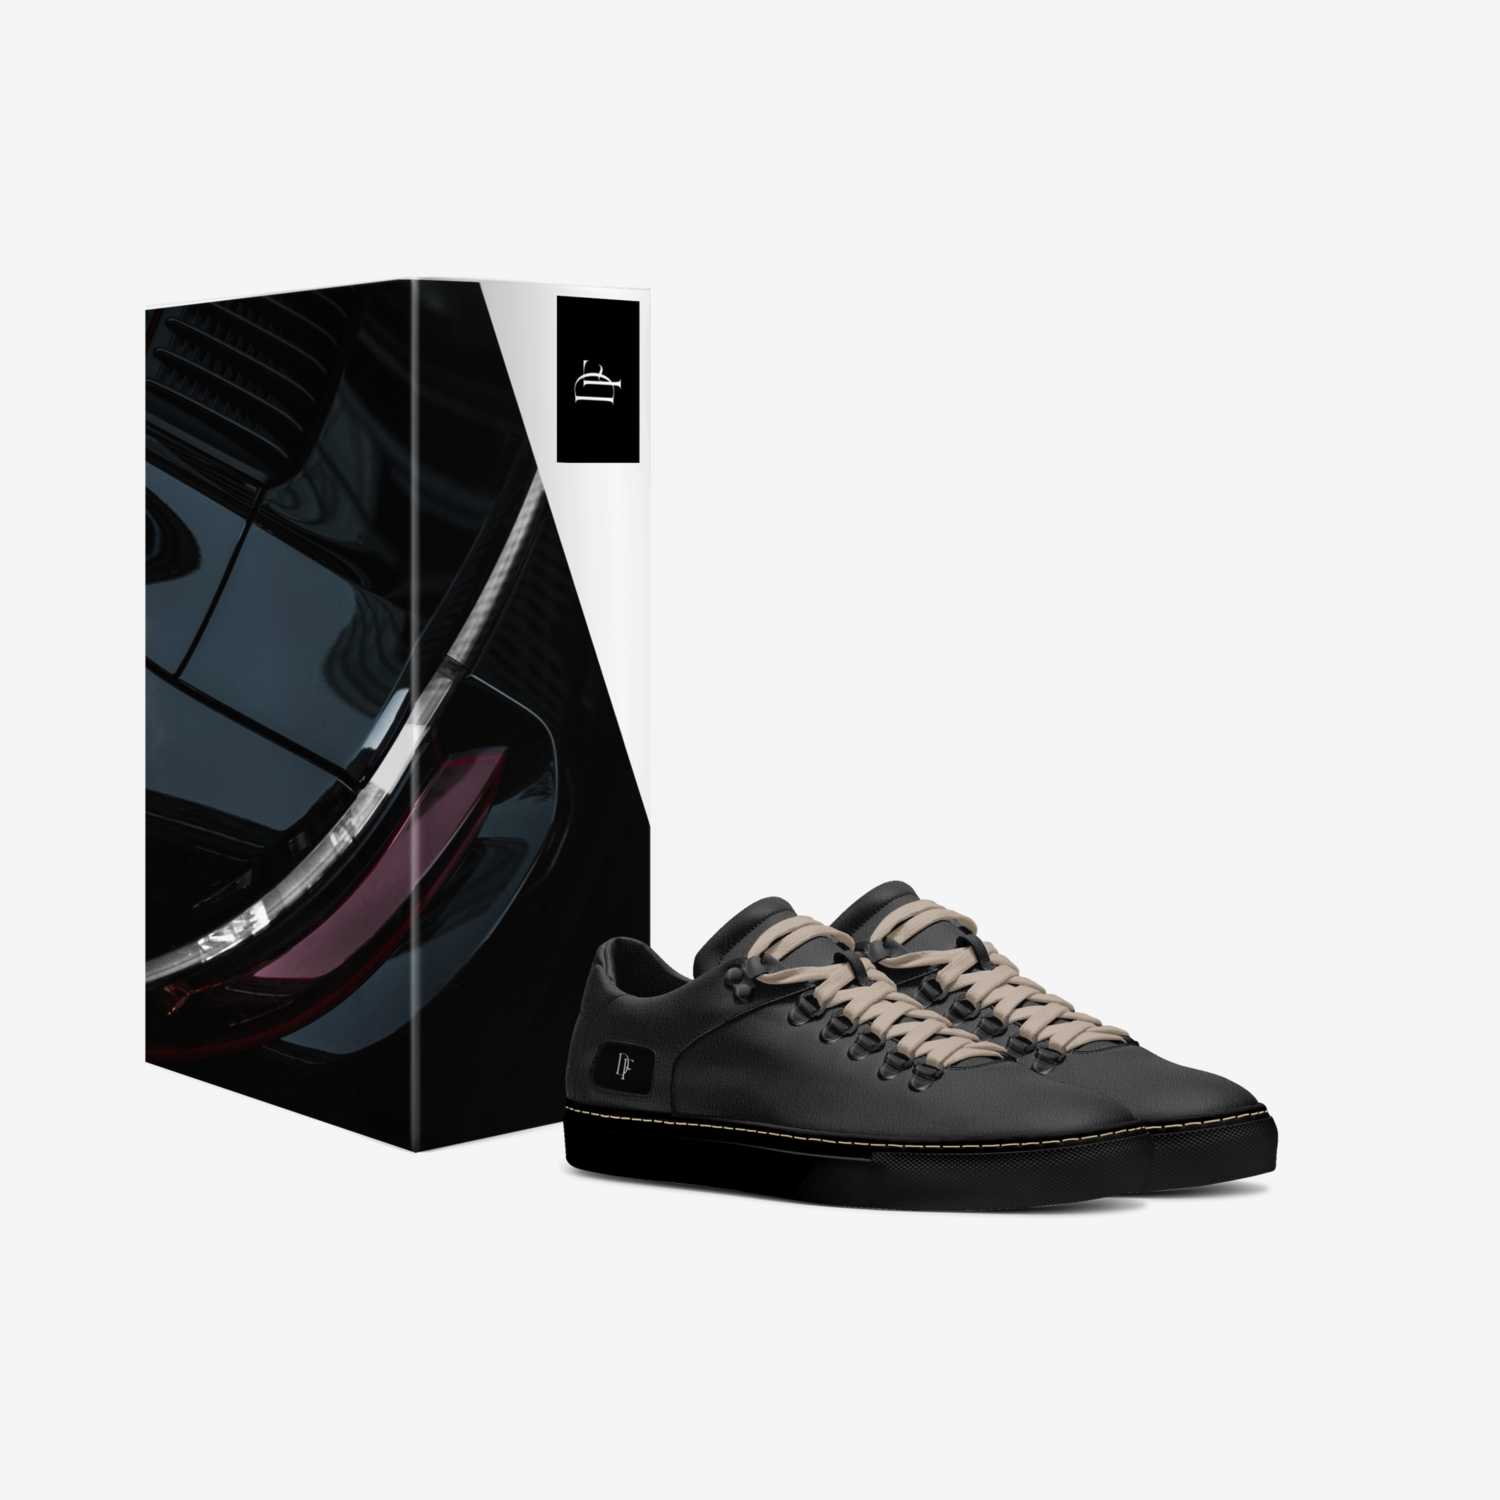 DALA custom made in Italy shoes by Daniel Grasmück | Box view